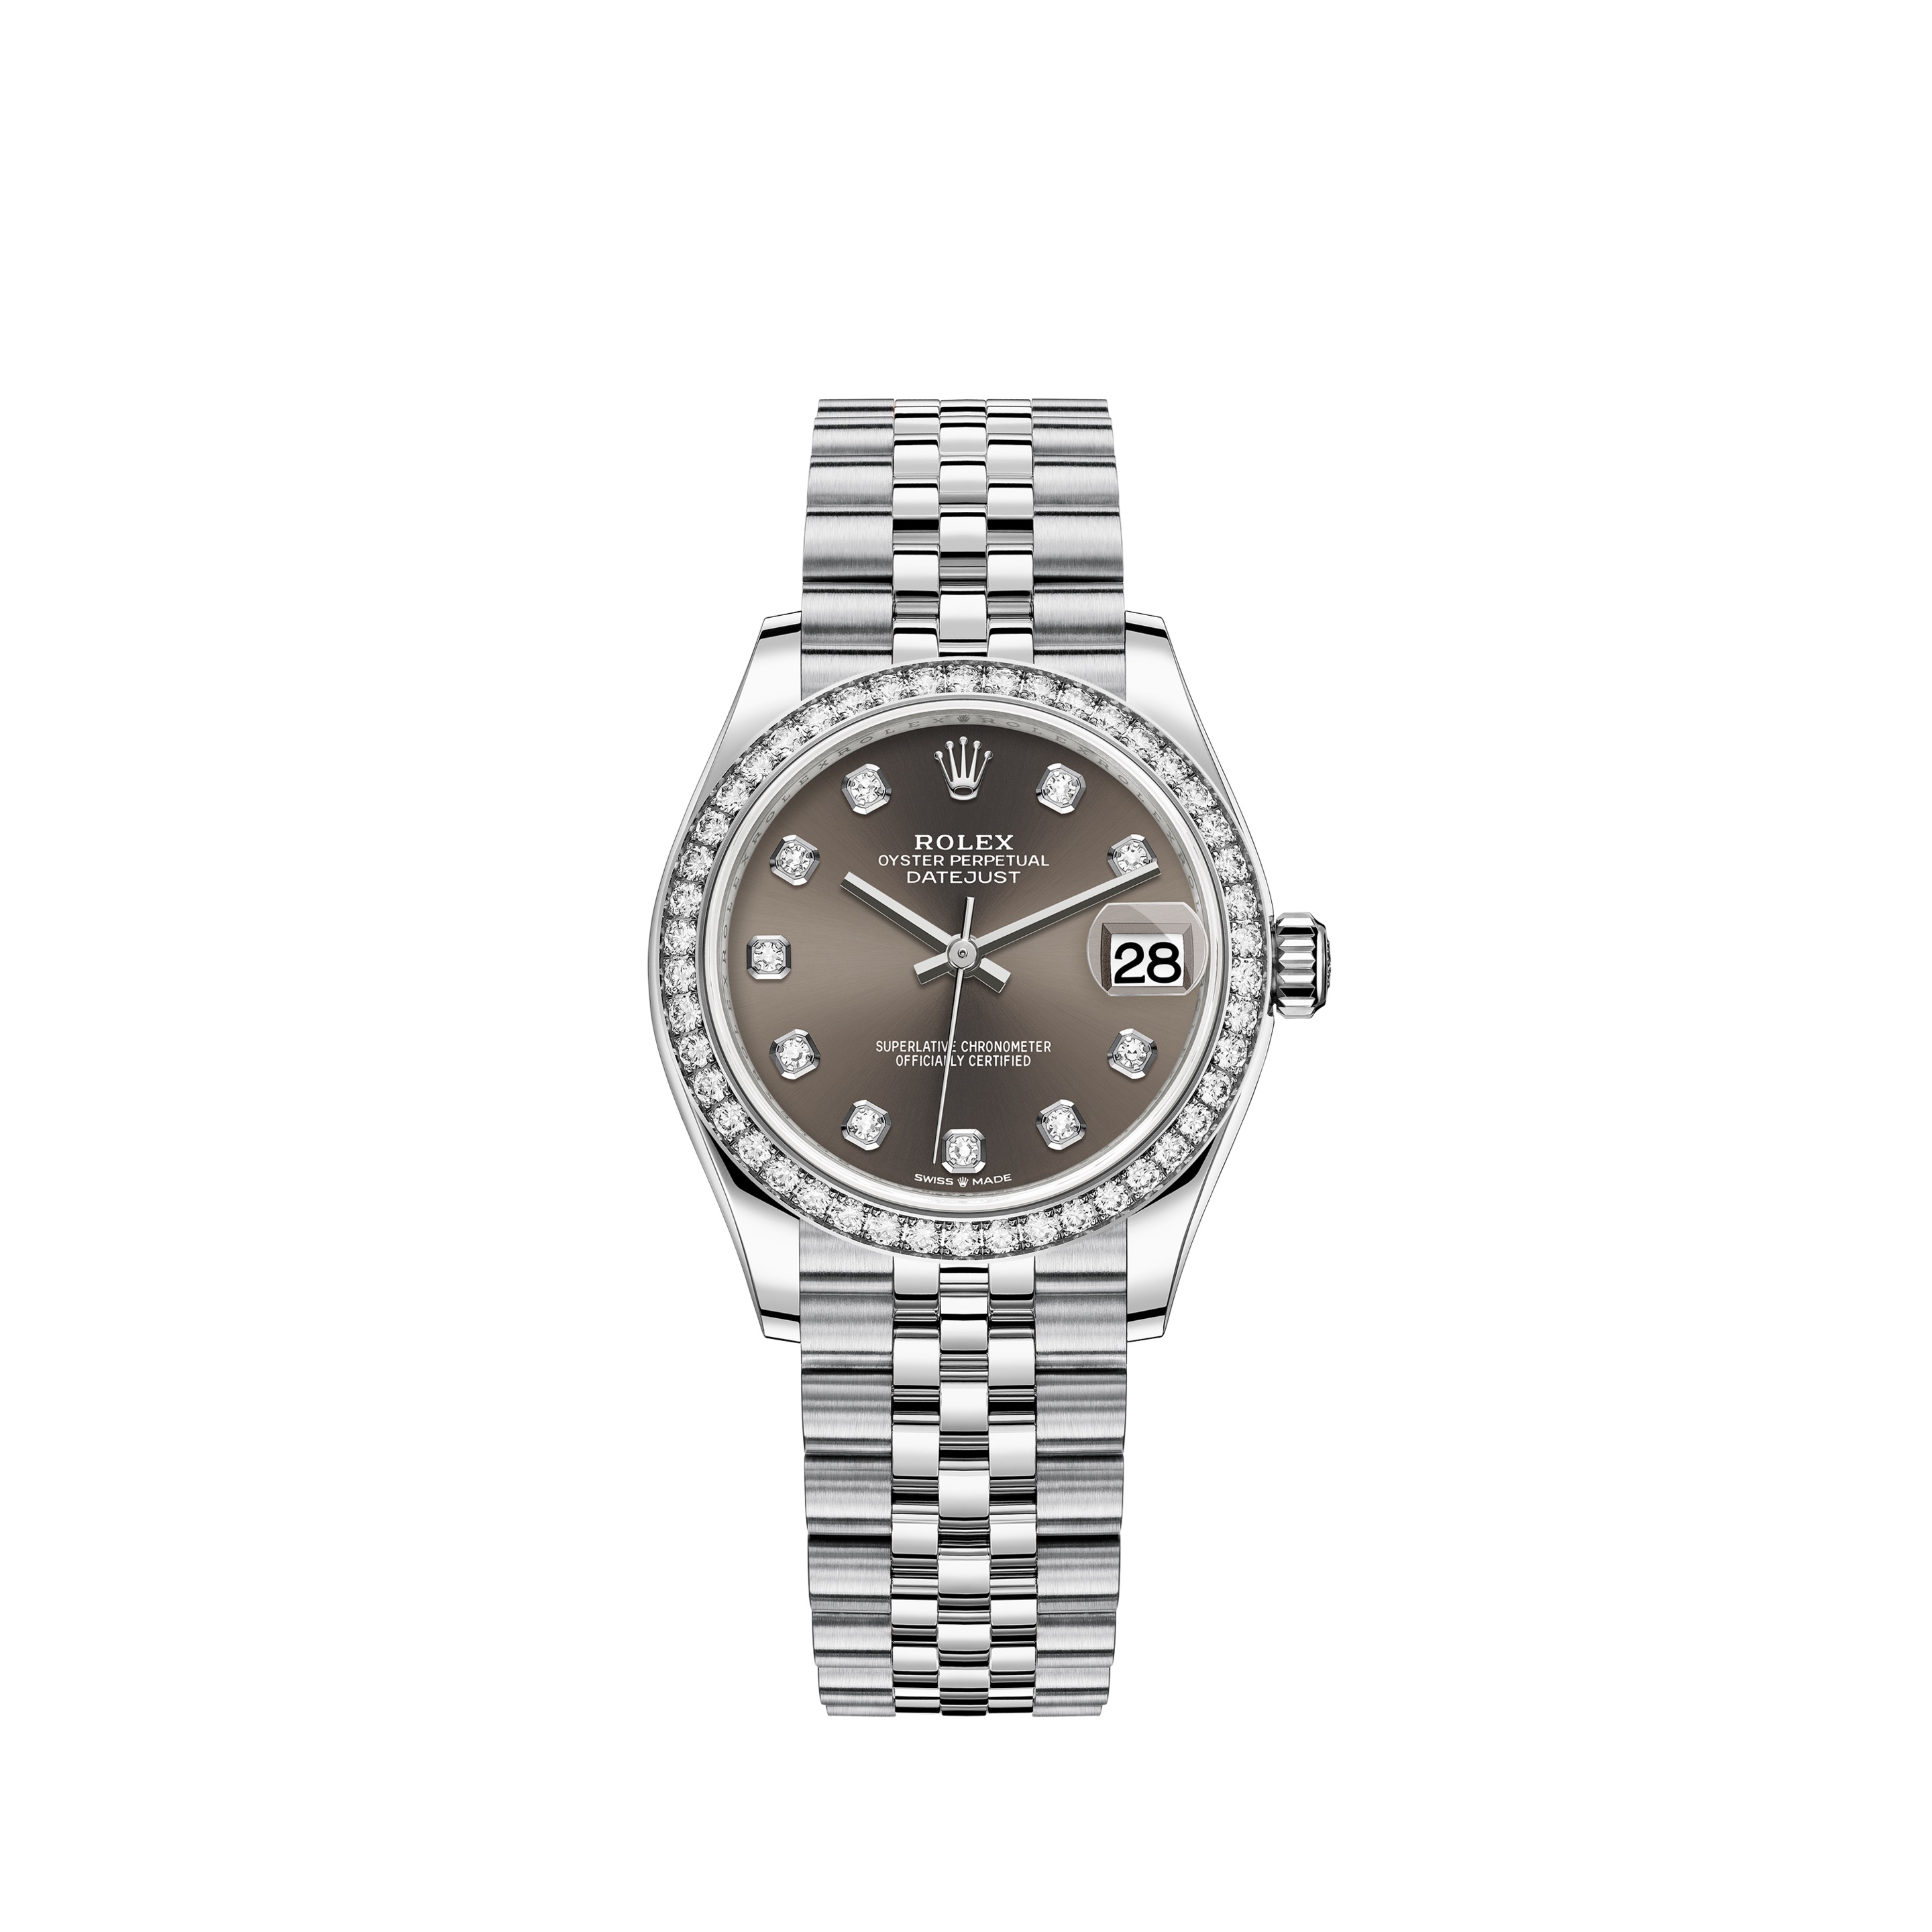 Datejust 31 278384RBR White Gold & Stainless Steel Watch (Dark Grey Set with Diamonds)